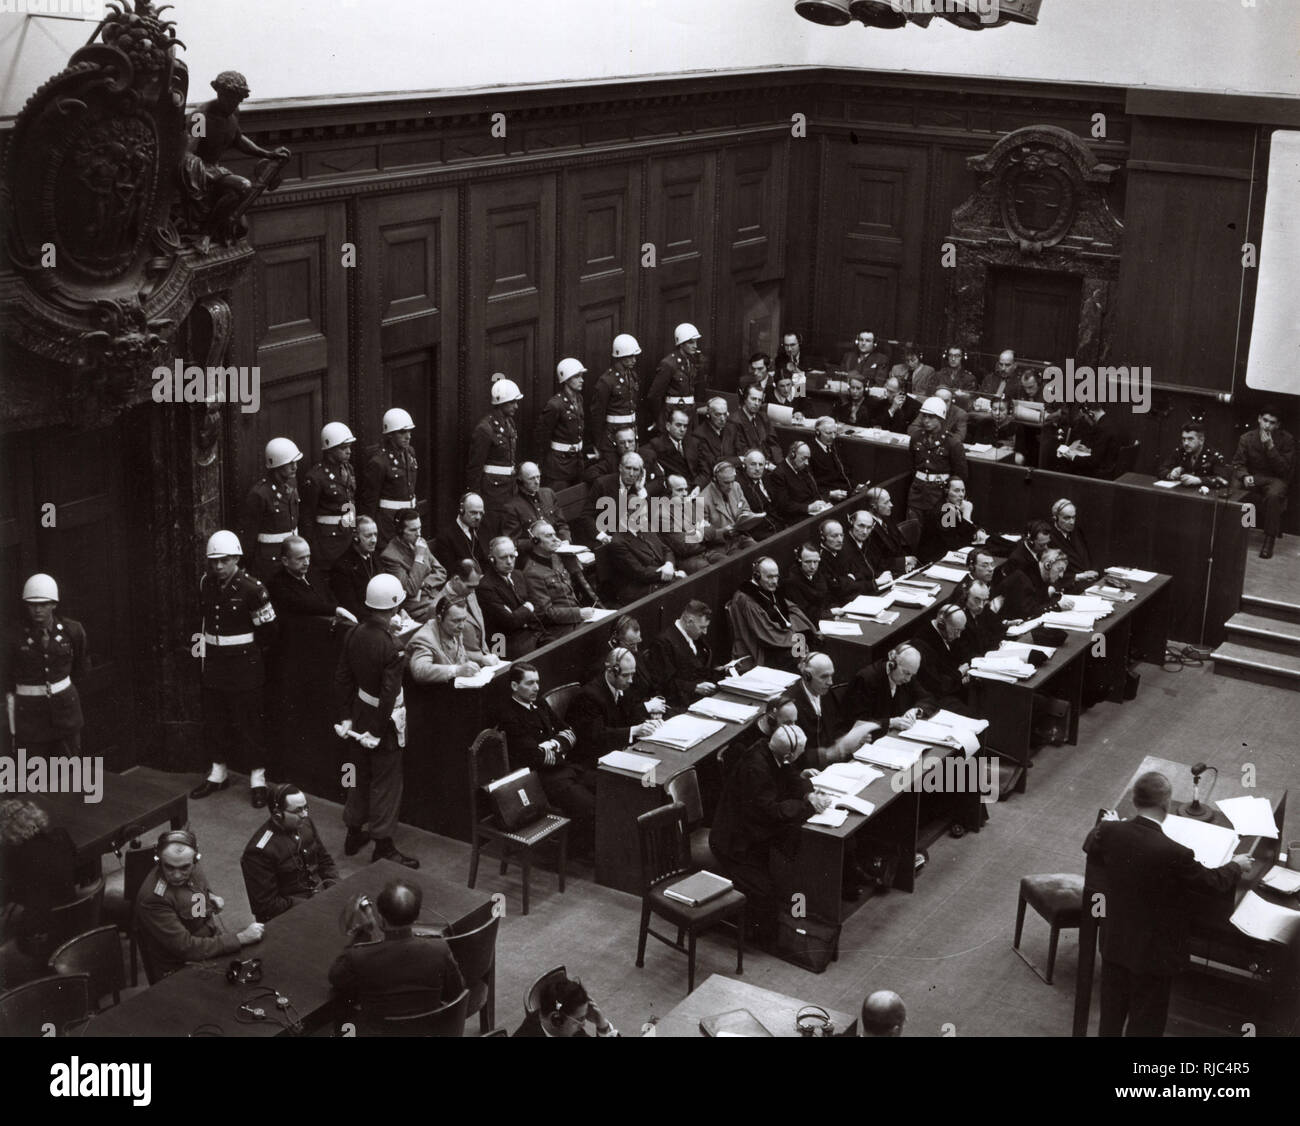 The Nuremberg Trials - The Defendants in the dock. Stock Photo